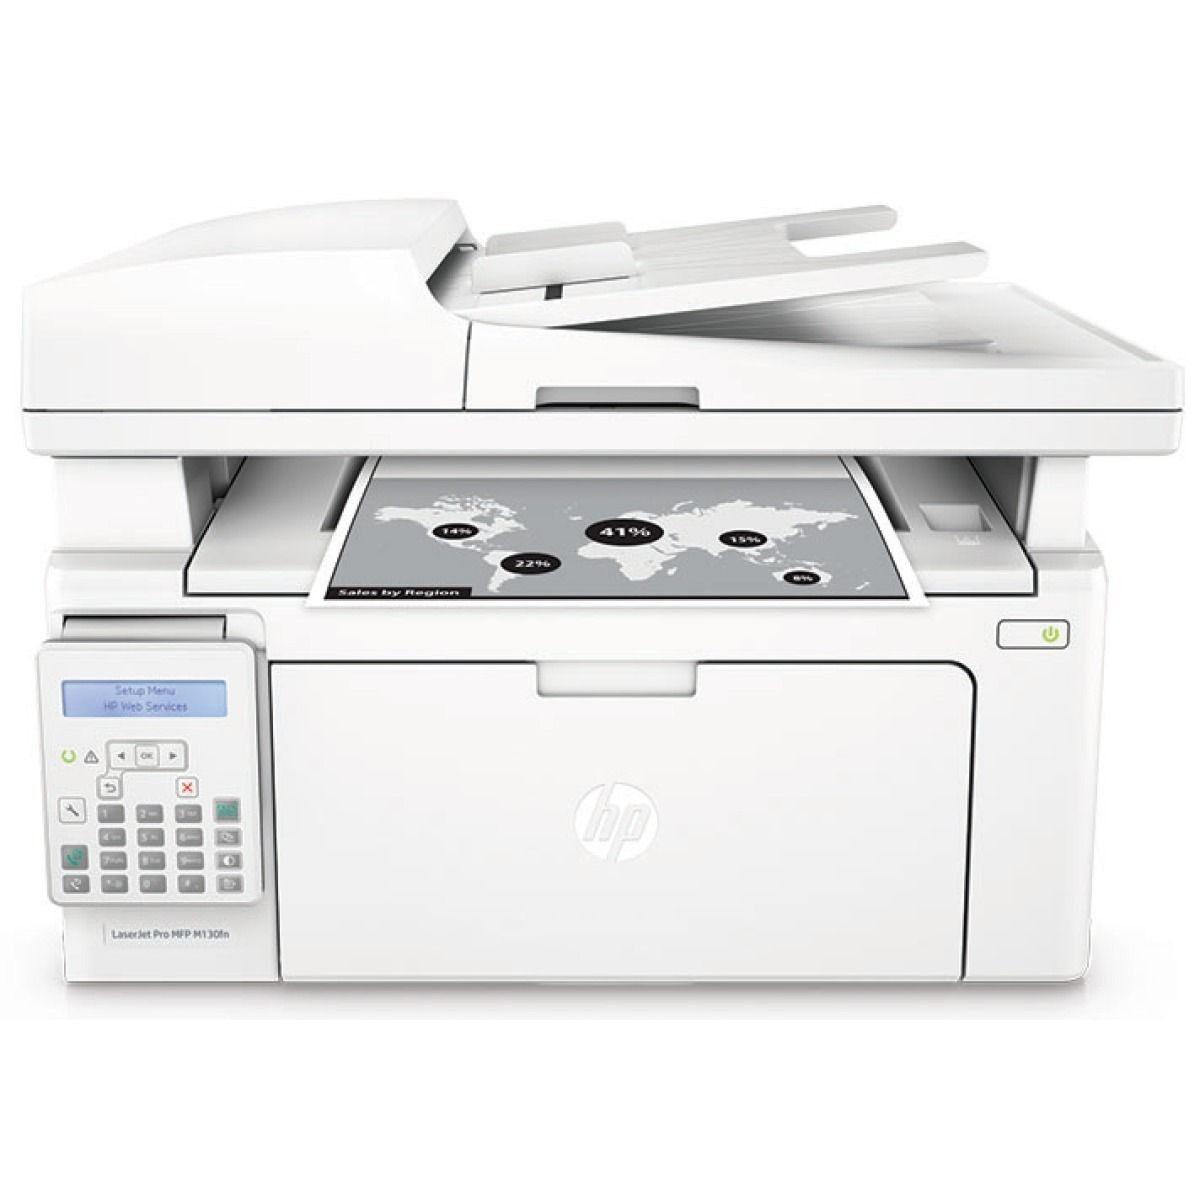 Multifunctionala HP LaserJet Pro MFP M130fn Printer Monocrom G3Q59A, A4, Retea